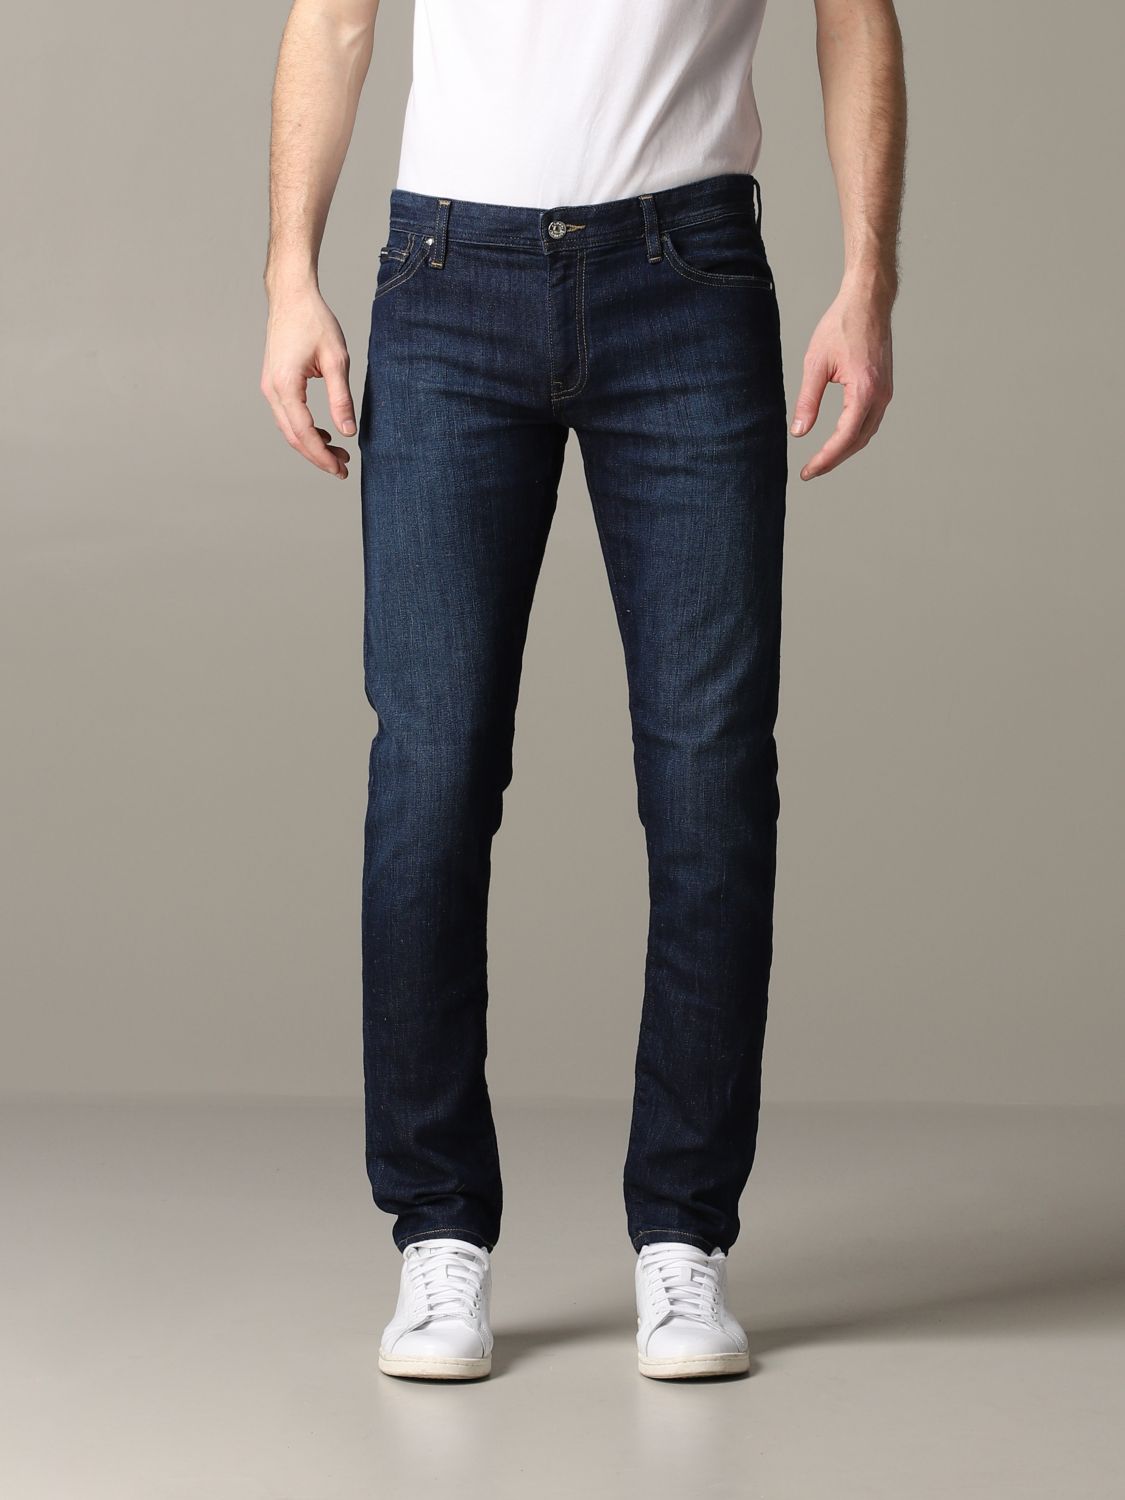 mens ea7 jeans